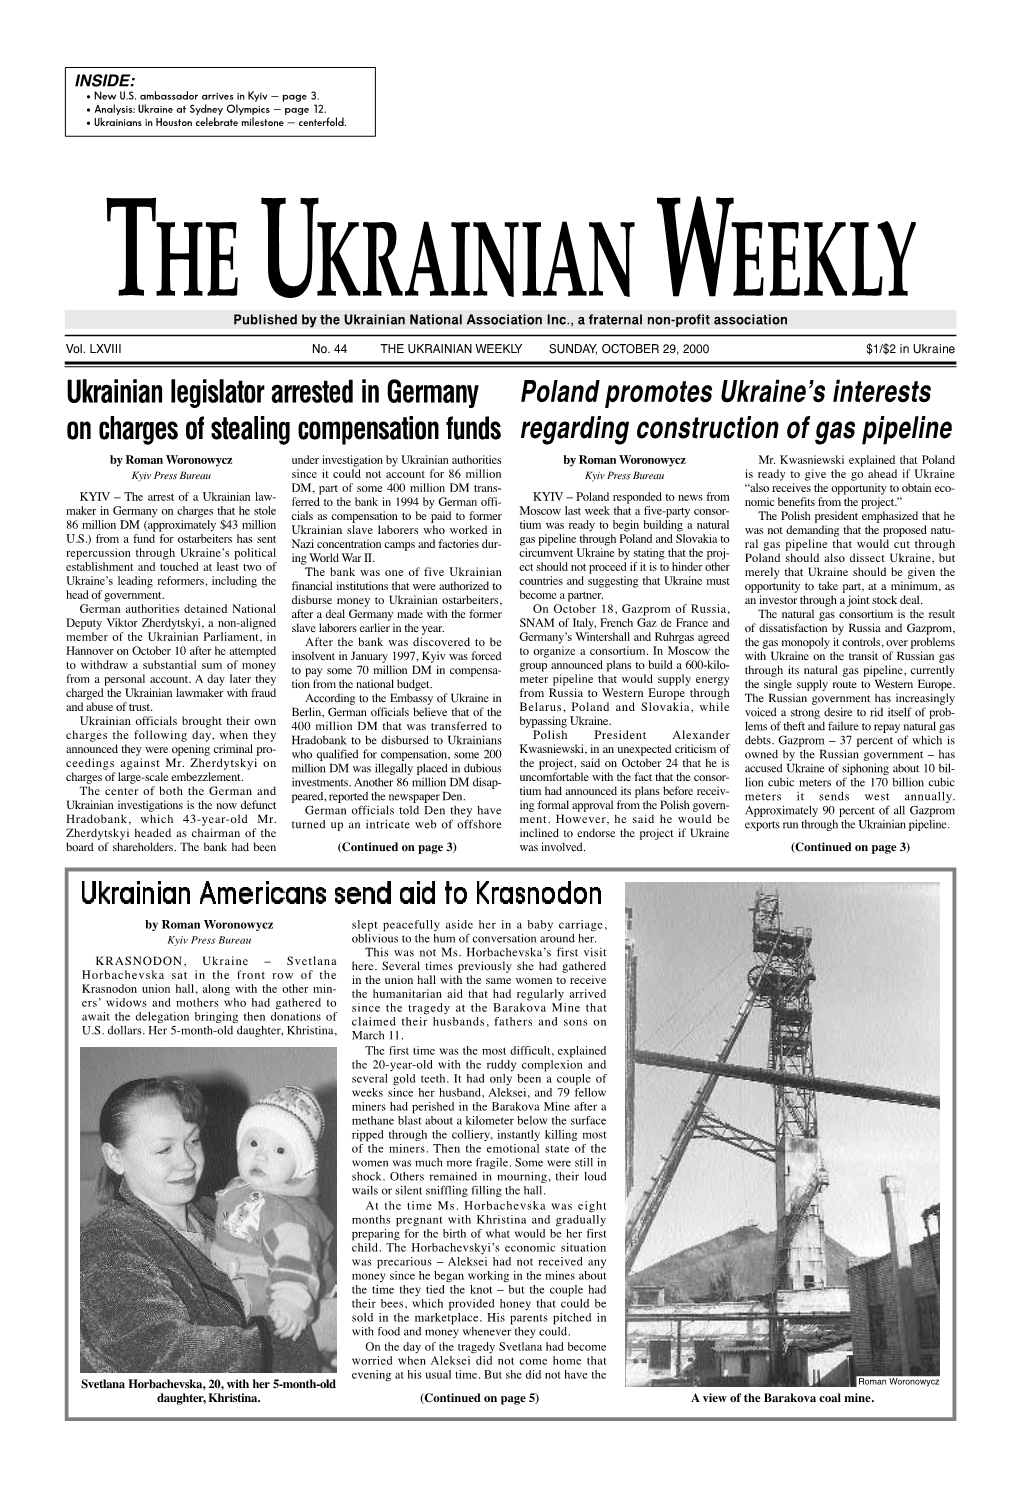 The Ukrainian Weekly 2000, No.44